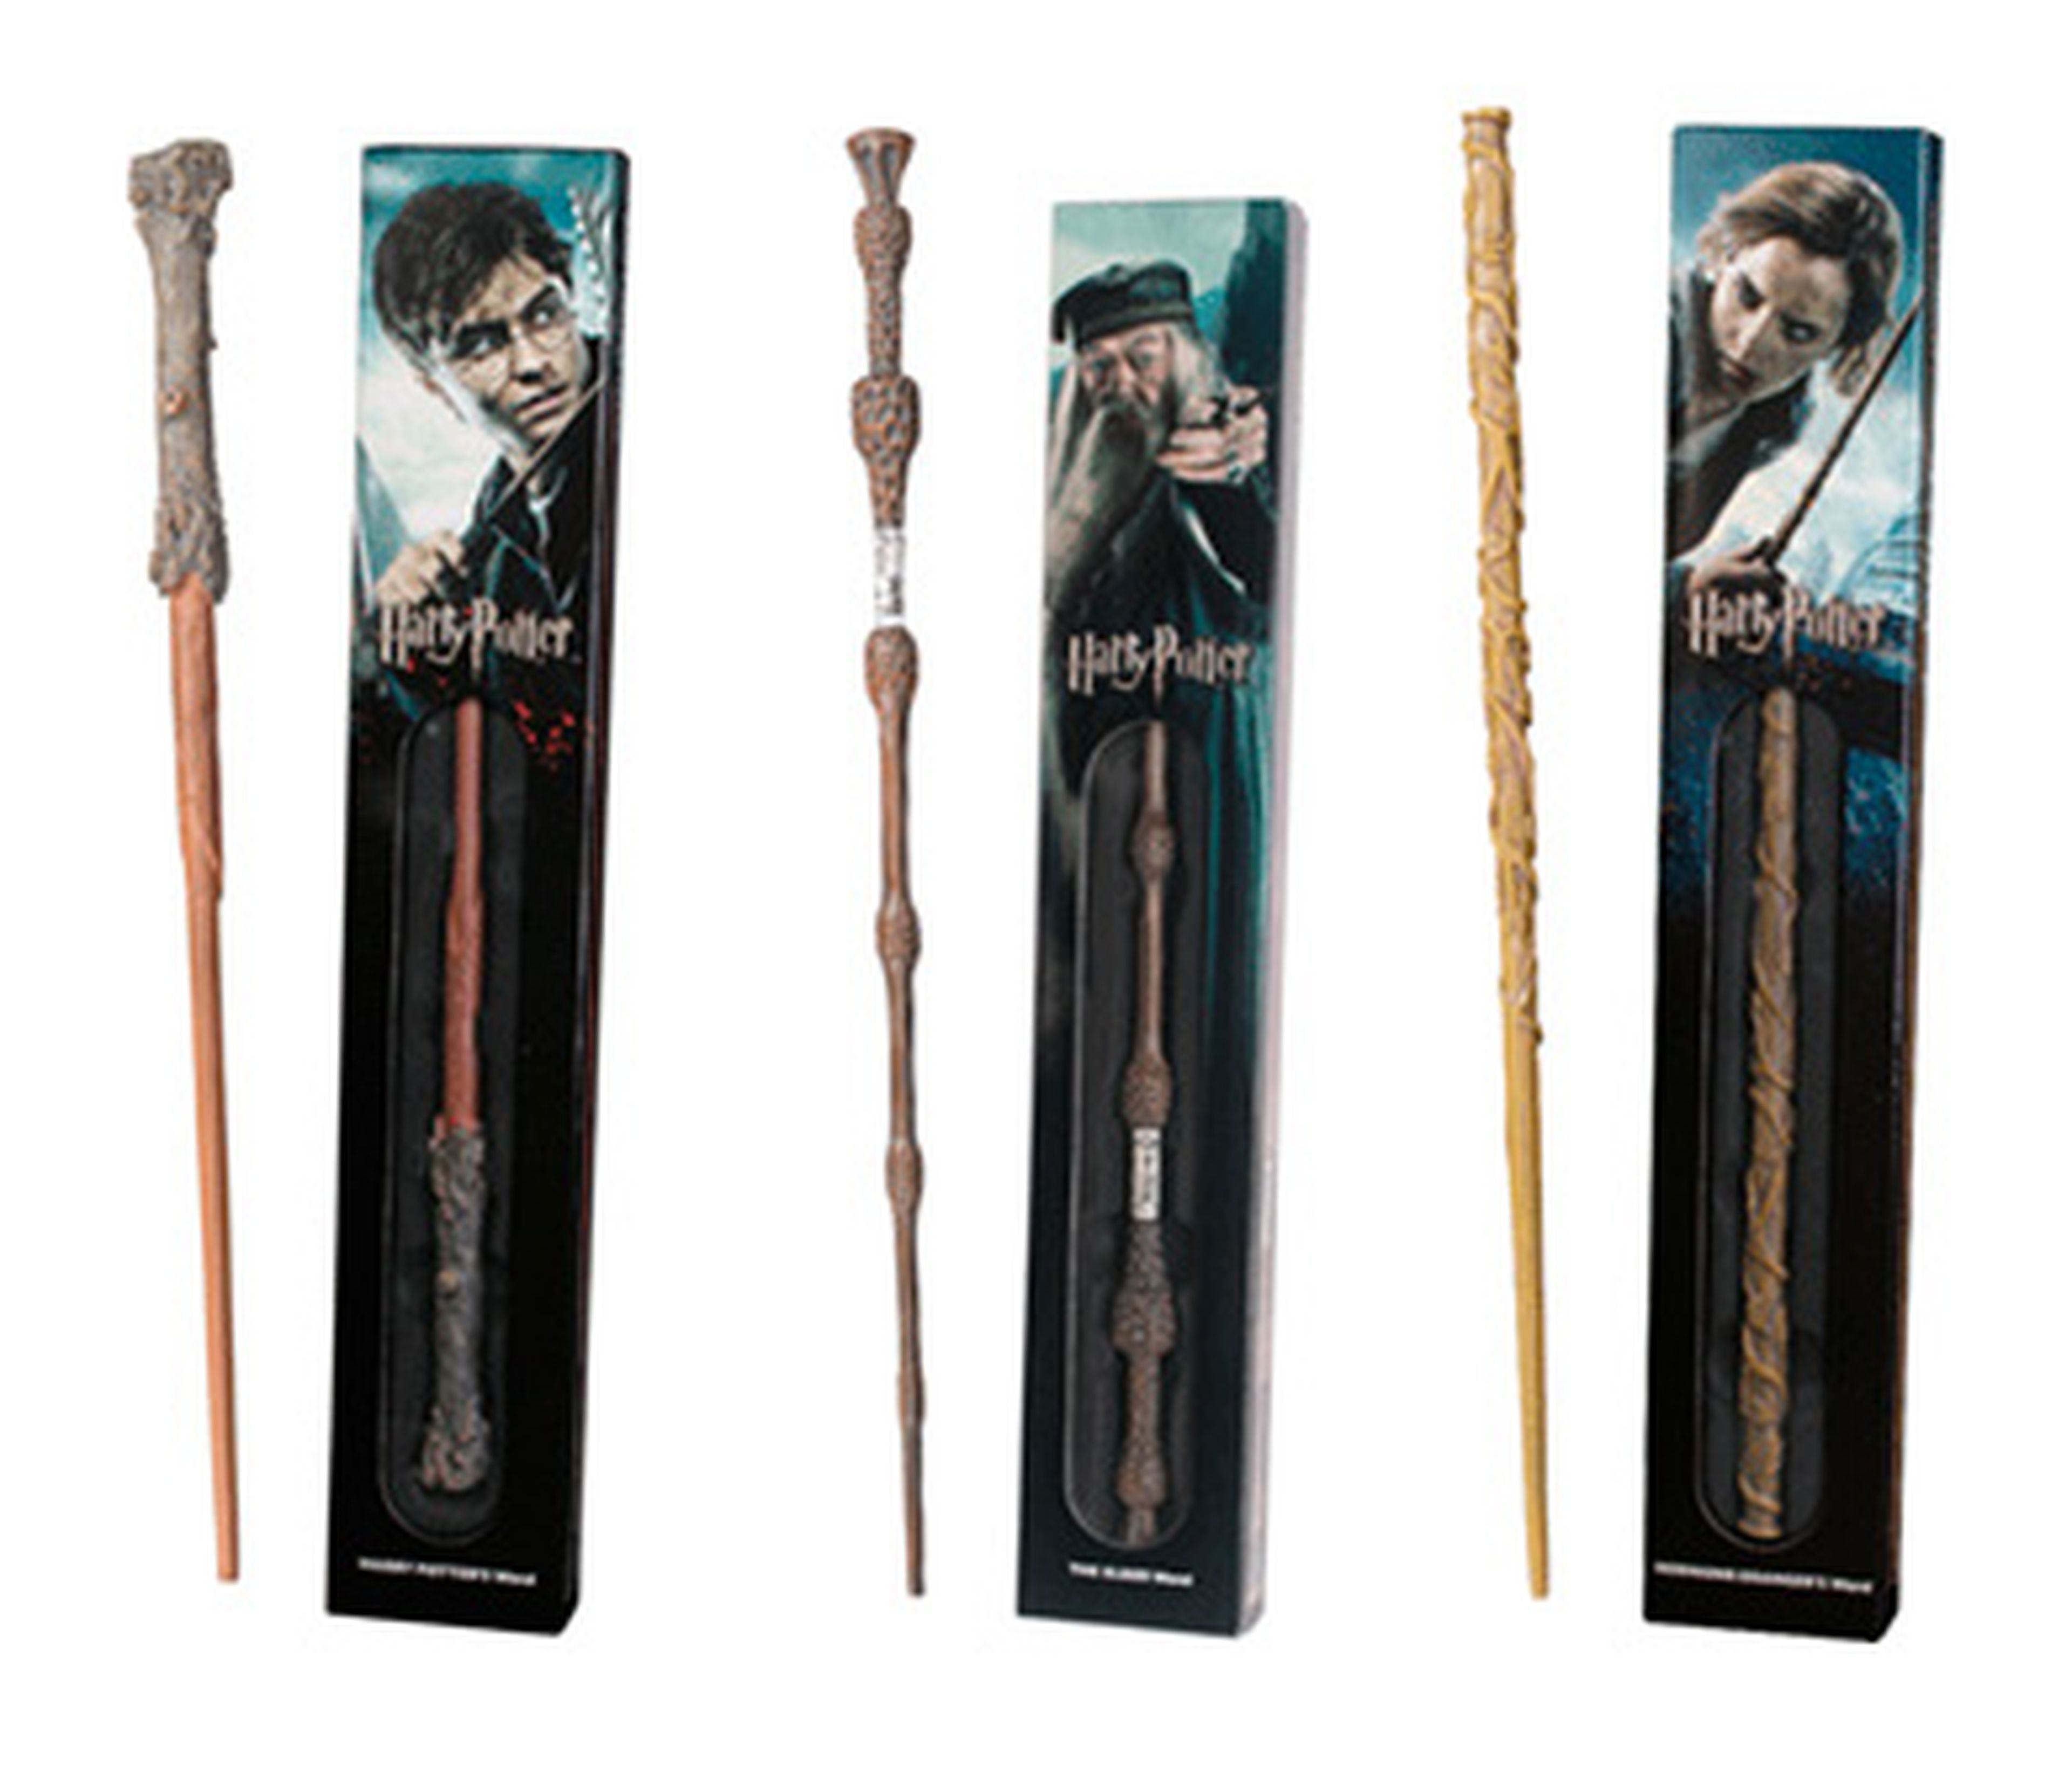 El mejor merchandising de Harry Potter, a tu alcance en GAME